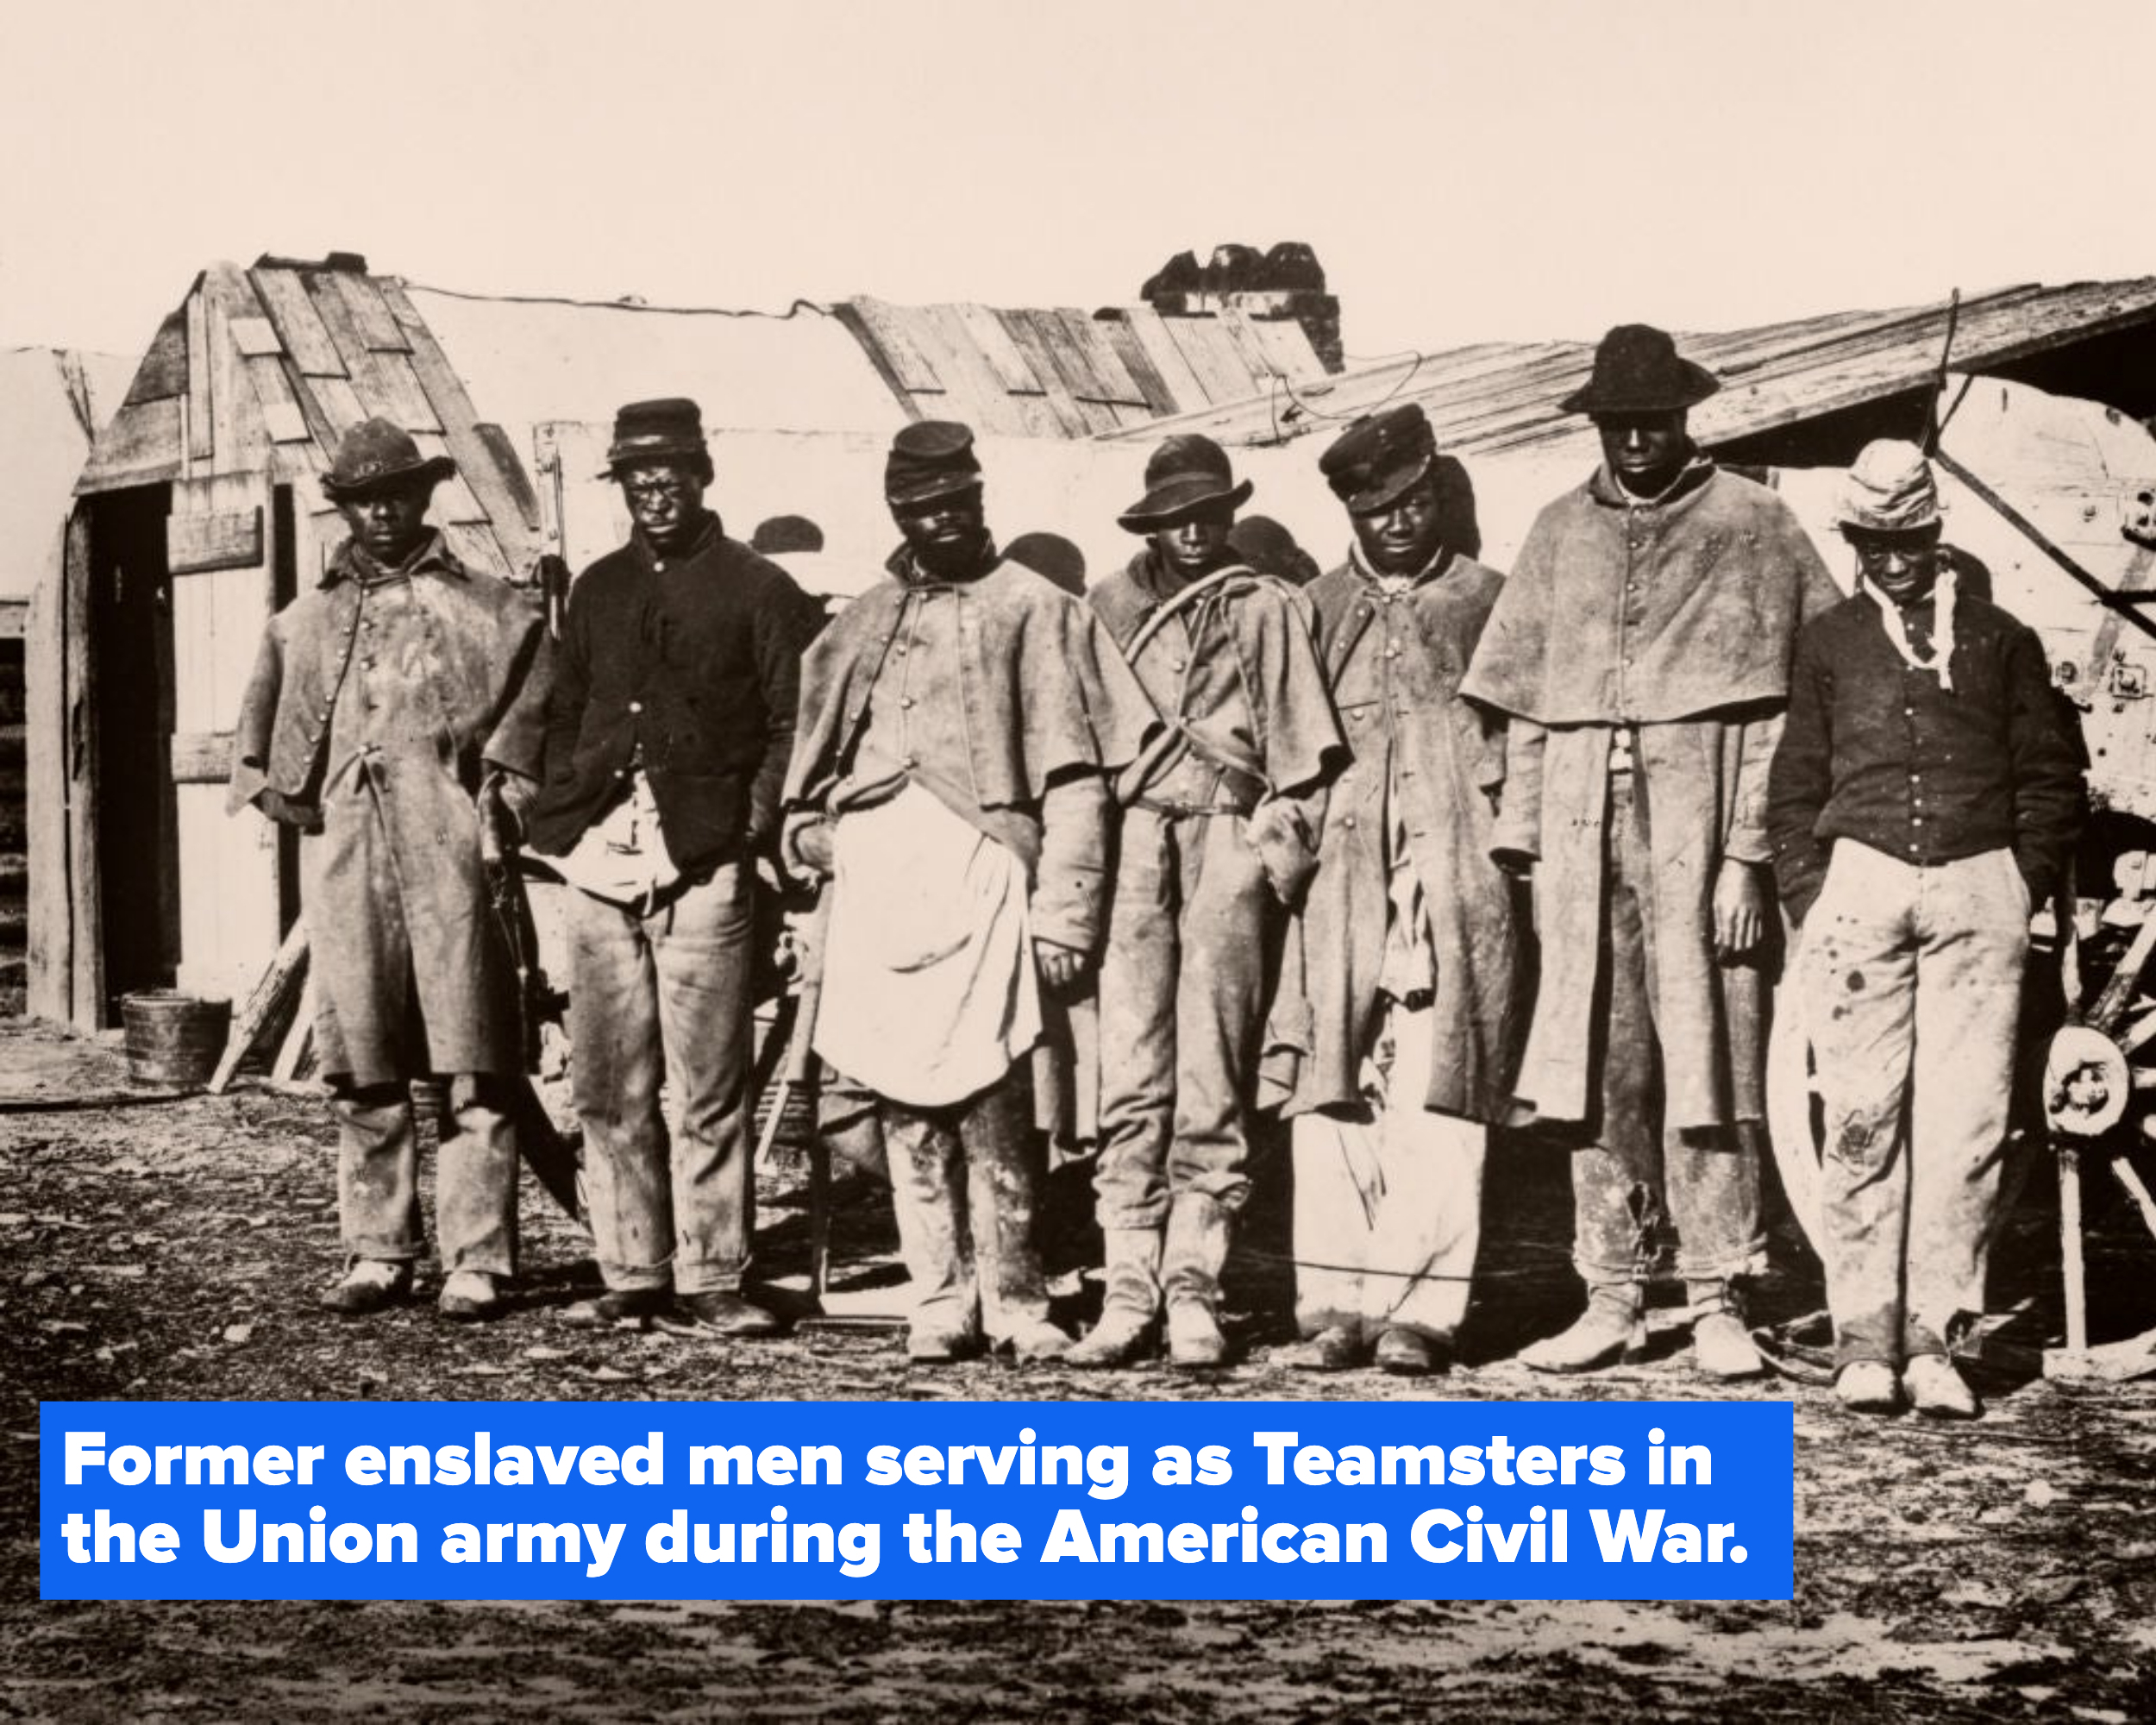 7 former enslaved men standing in line during the American Civil War